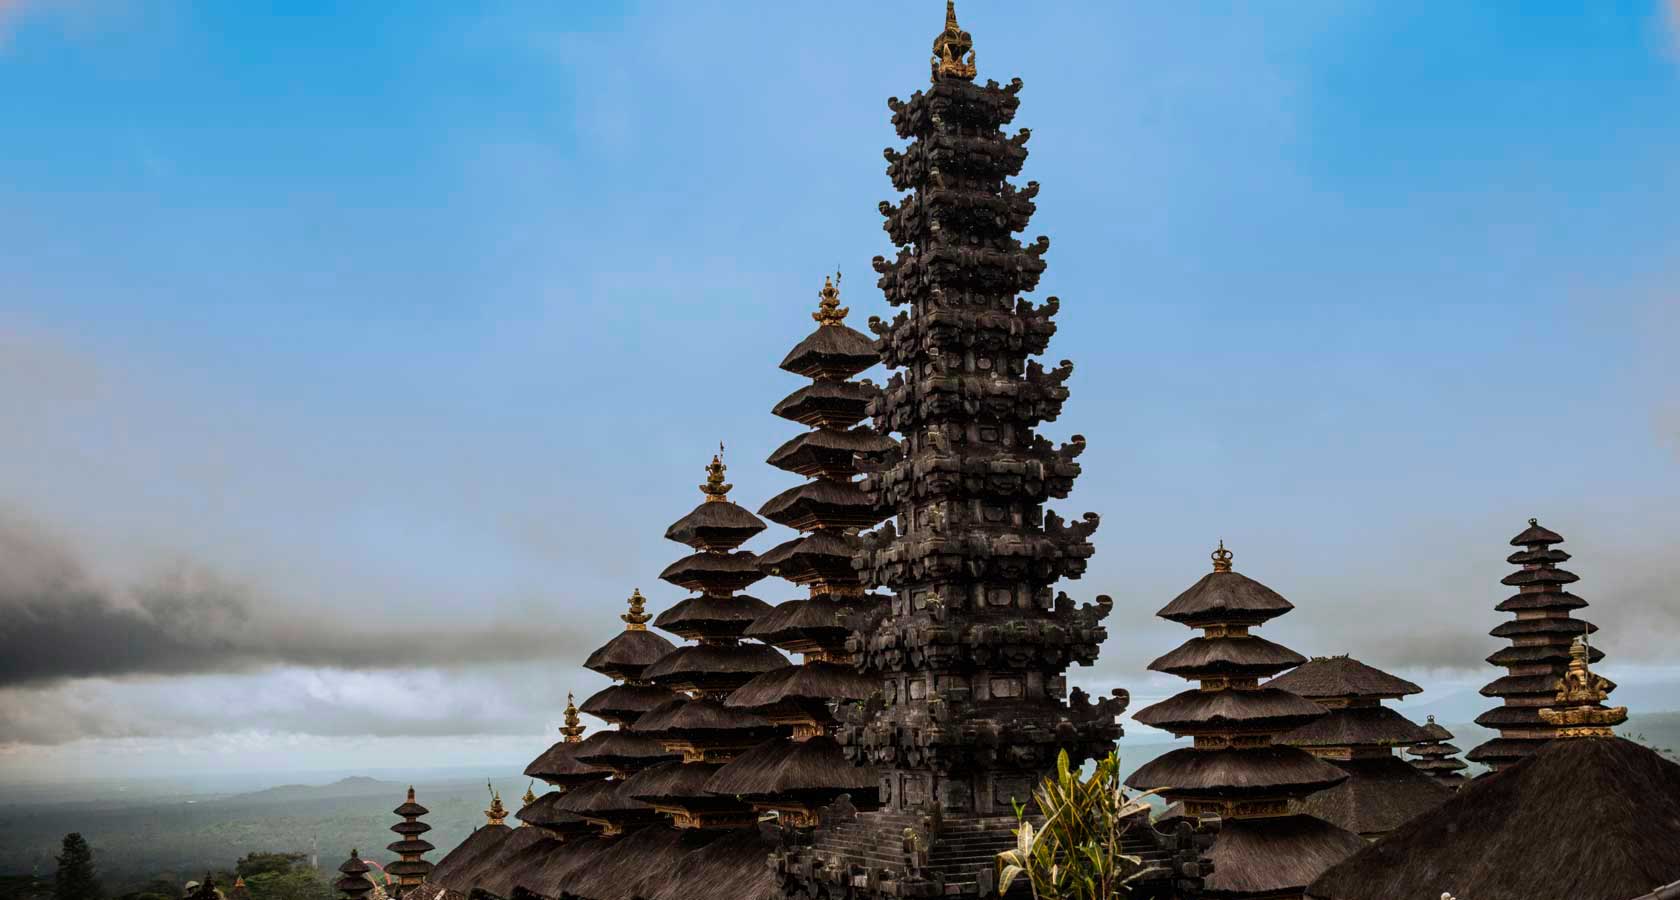 храм пура бесаких на вулкане агунг остров бали в индонезии